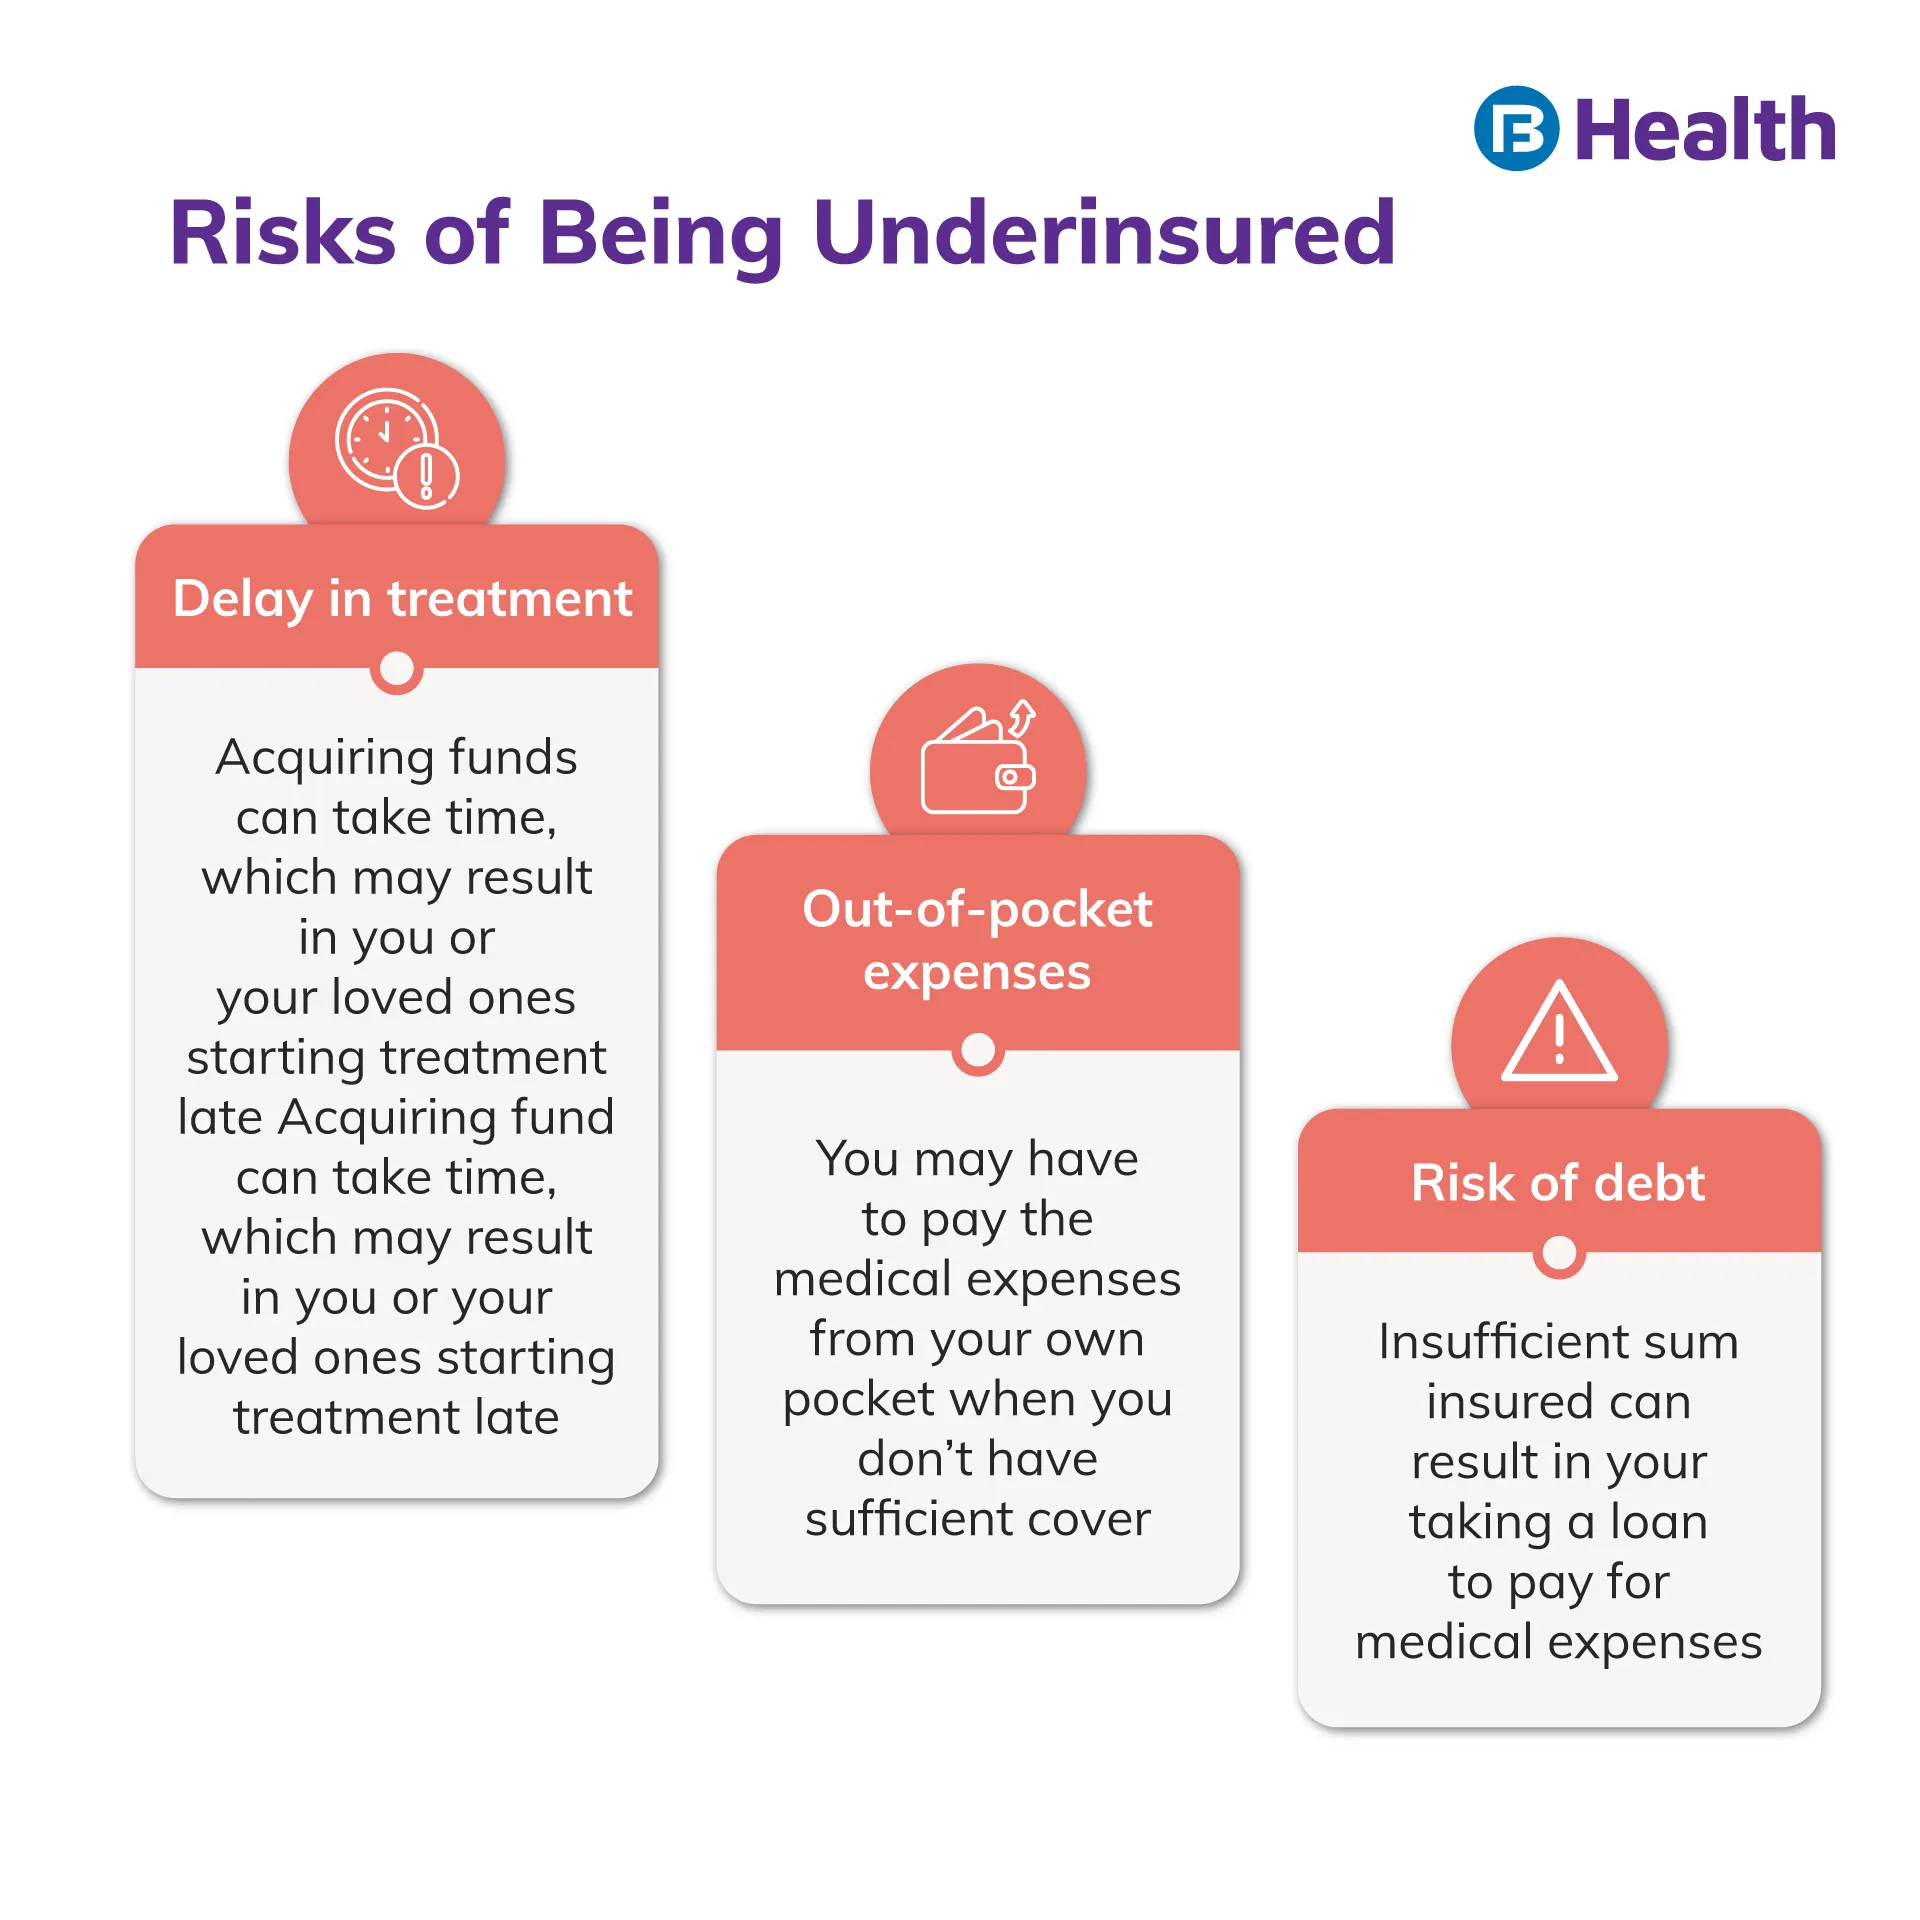 Risk of Underinsured